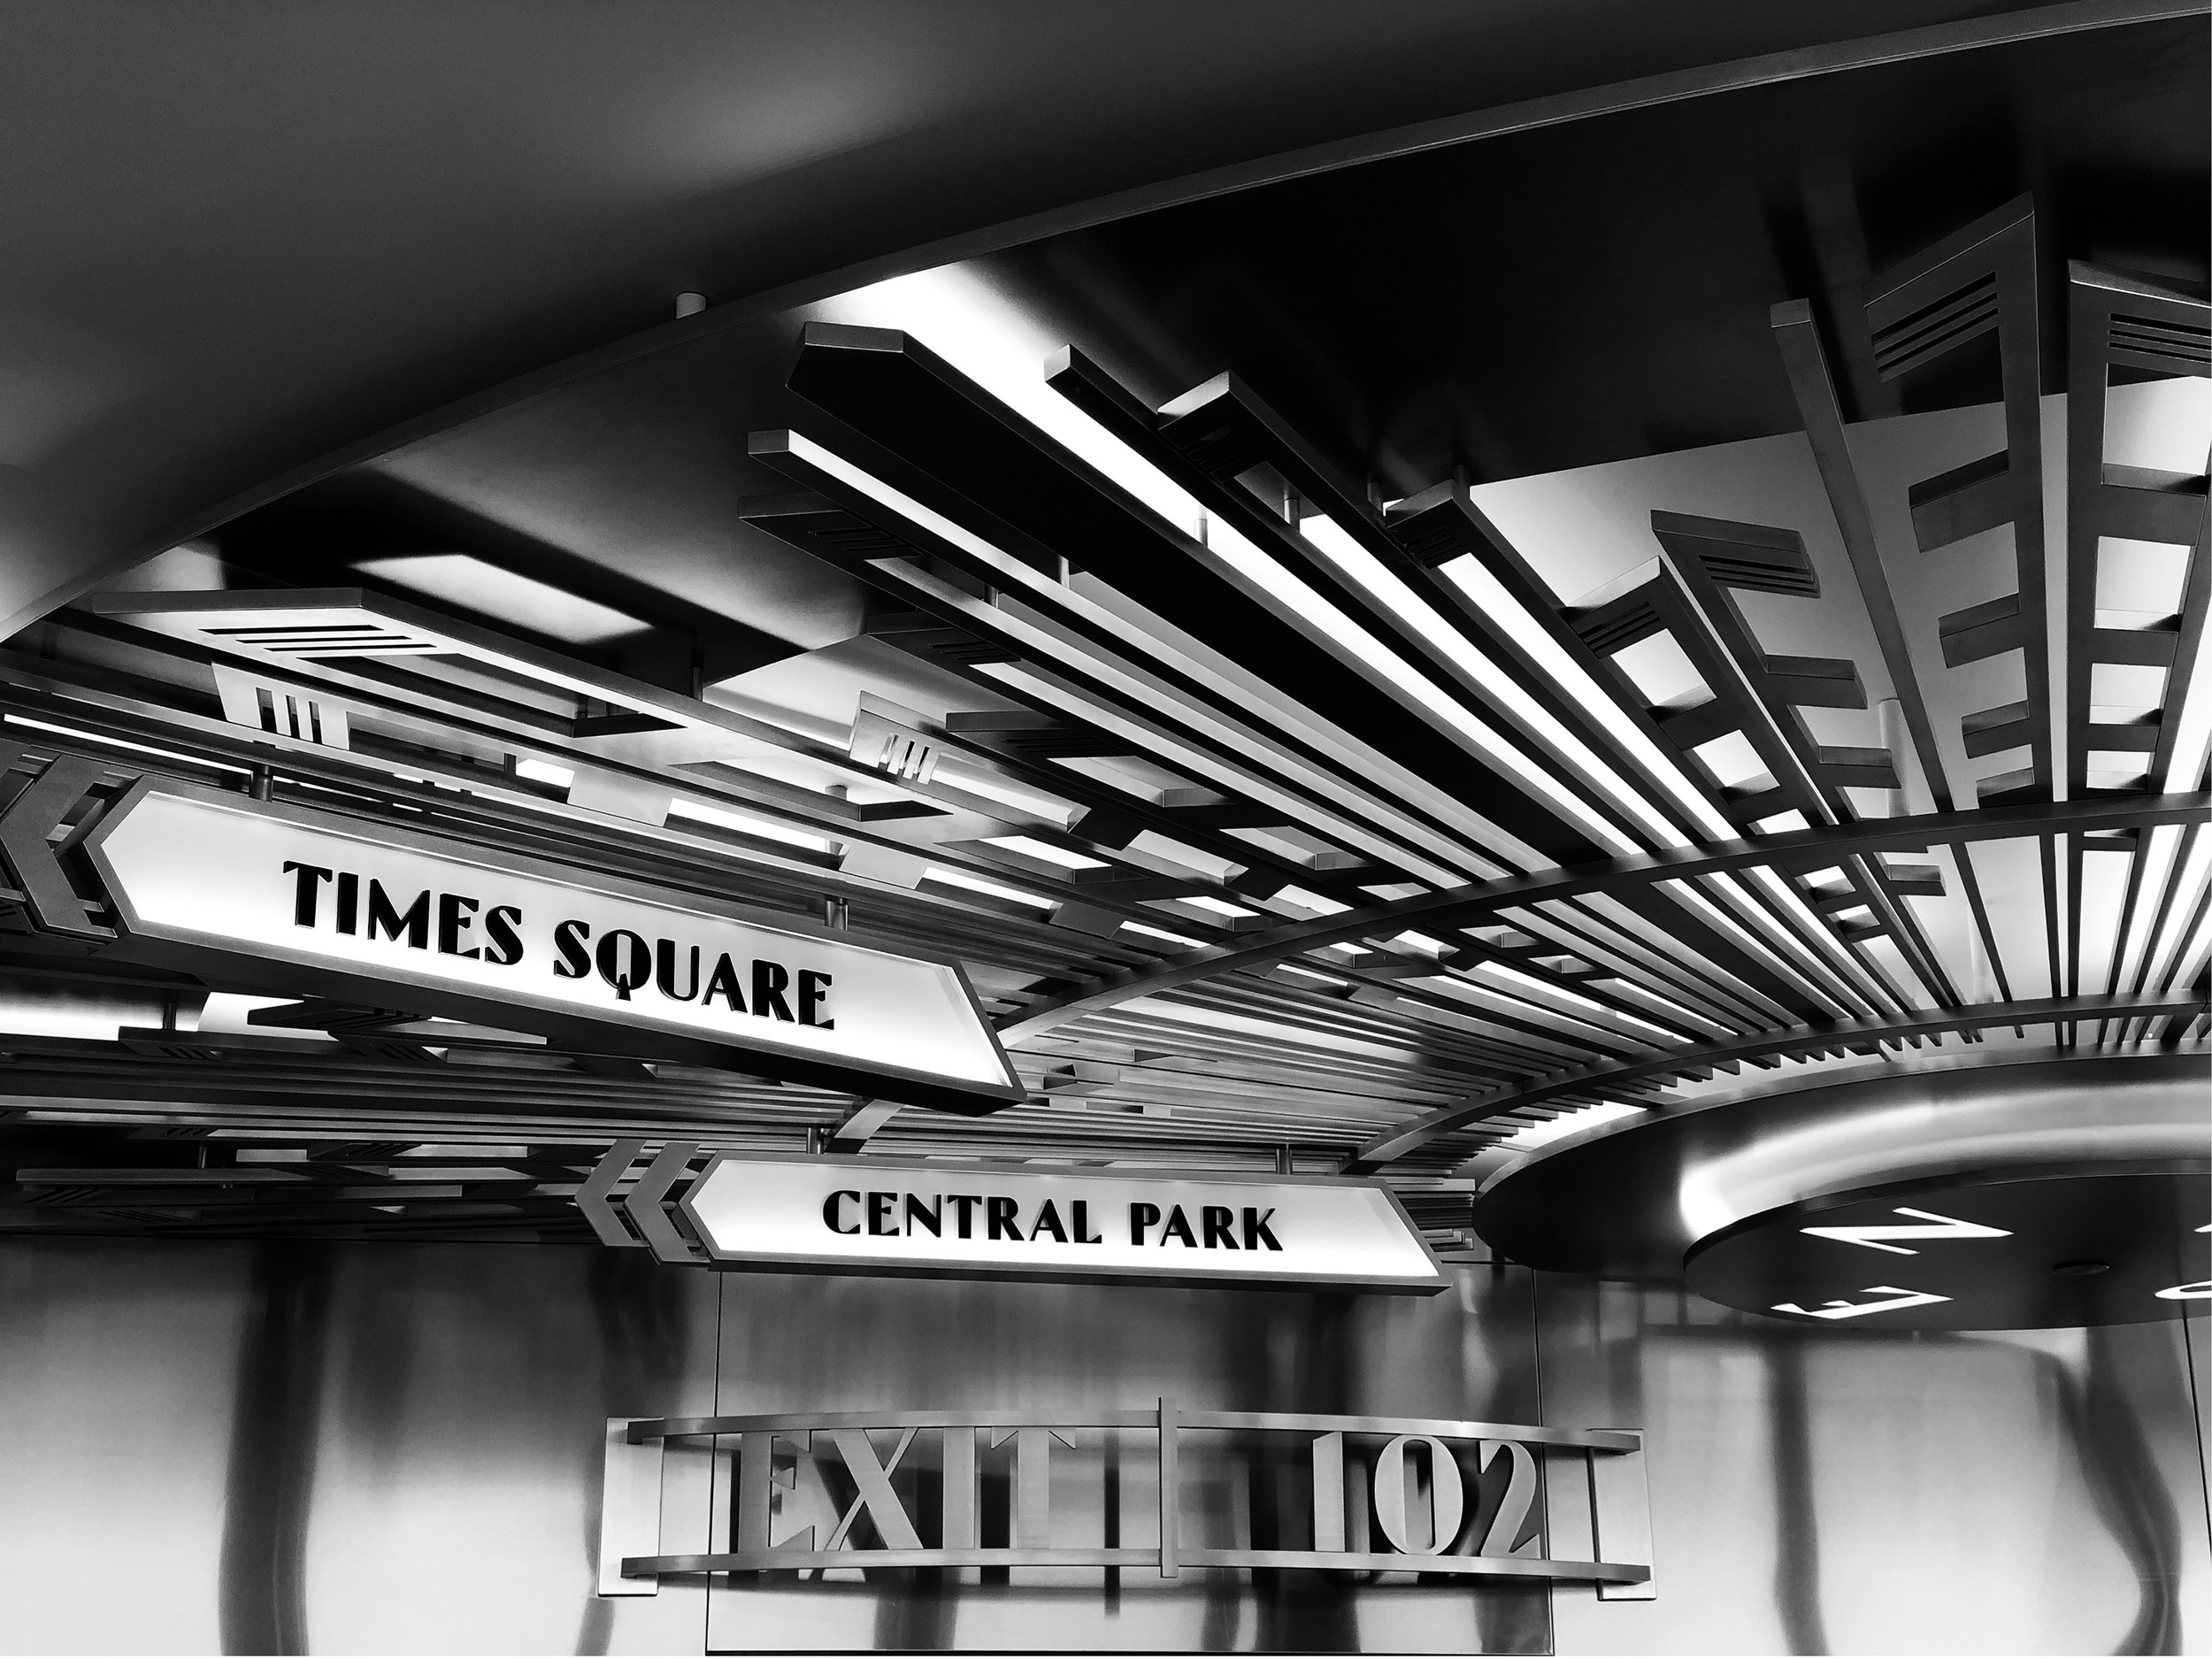 142-Empire-Times Square-7778-2.jpg